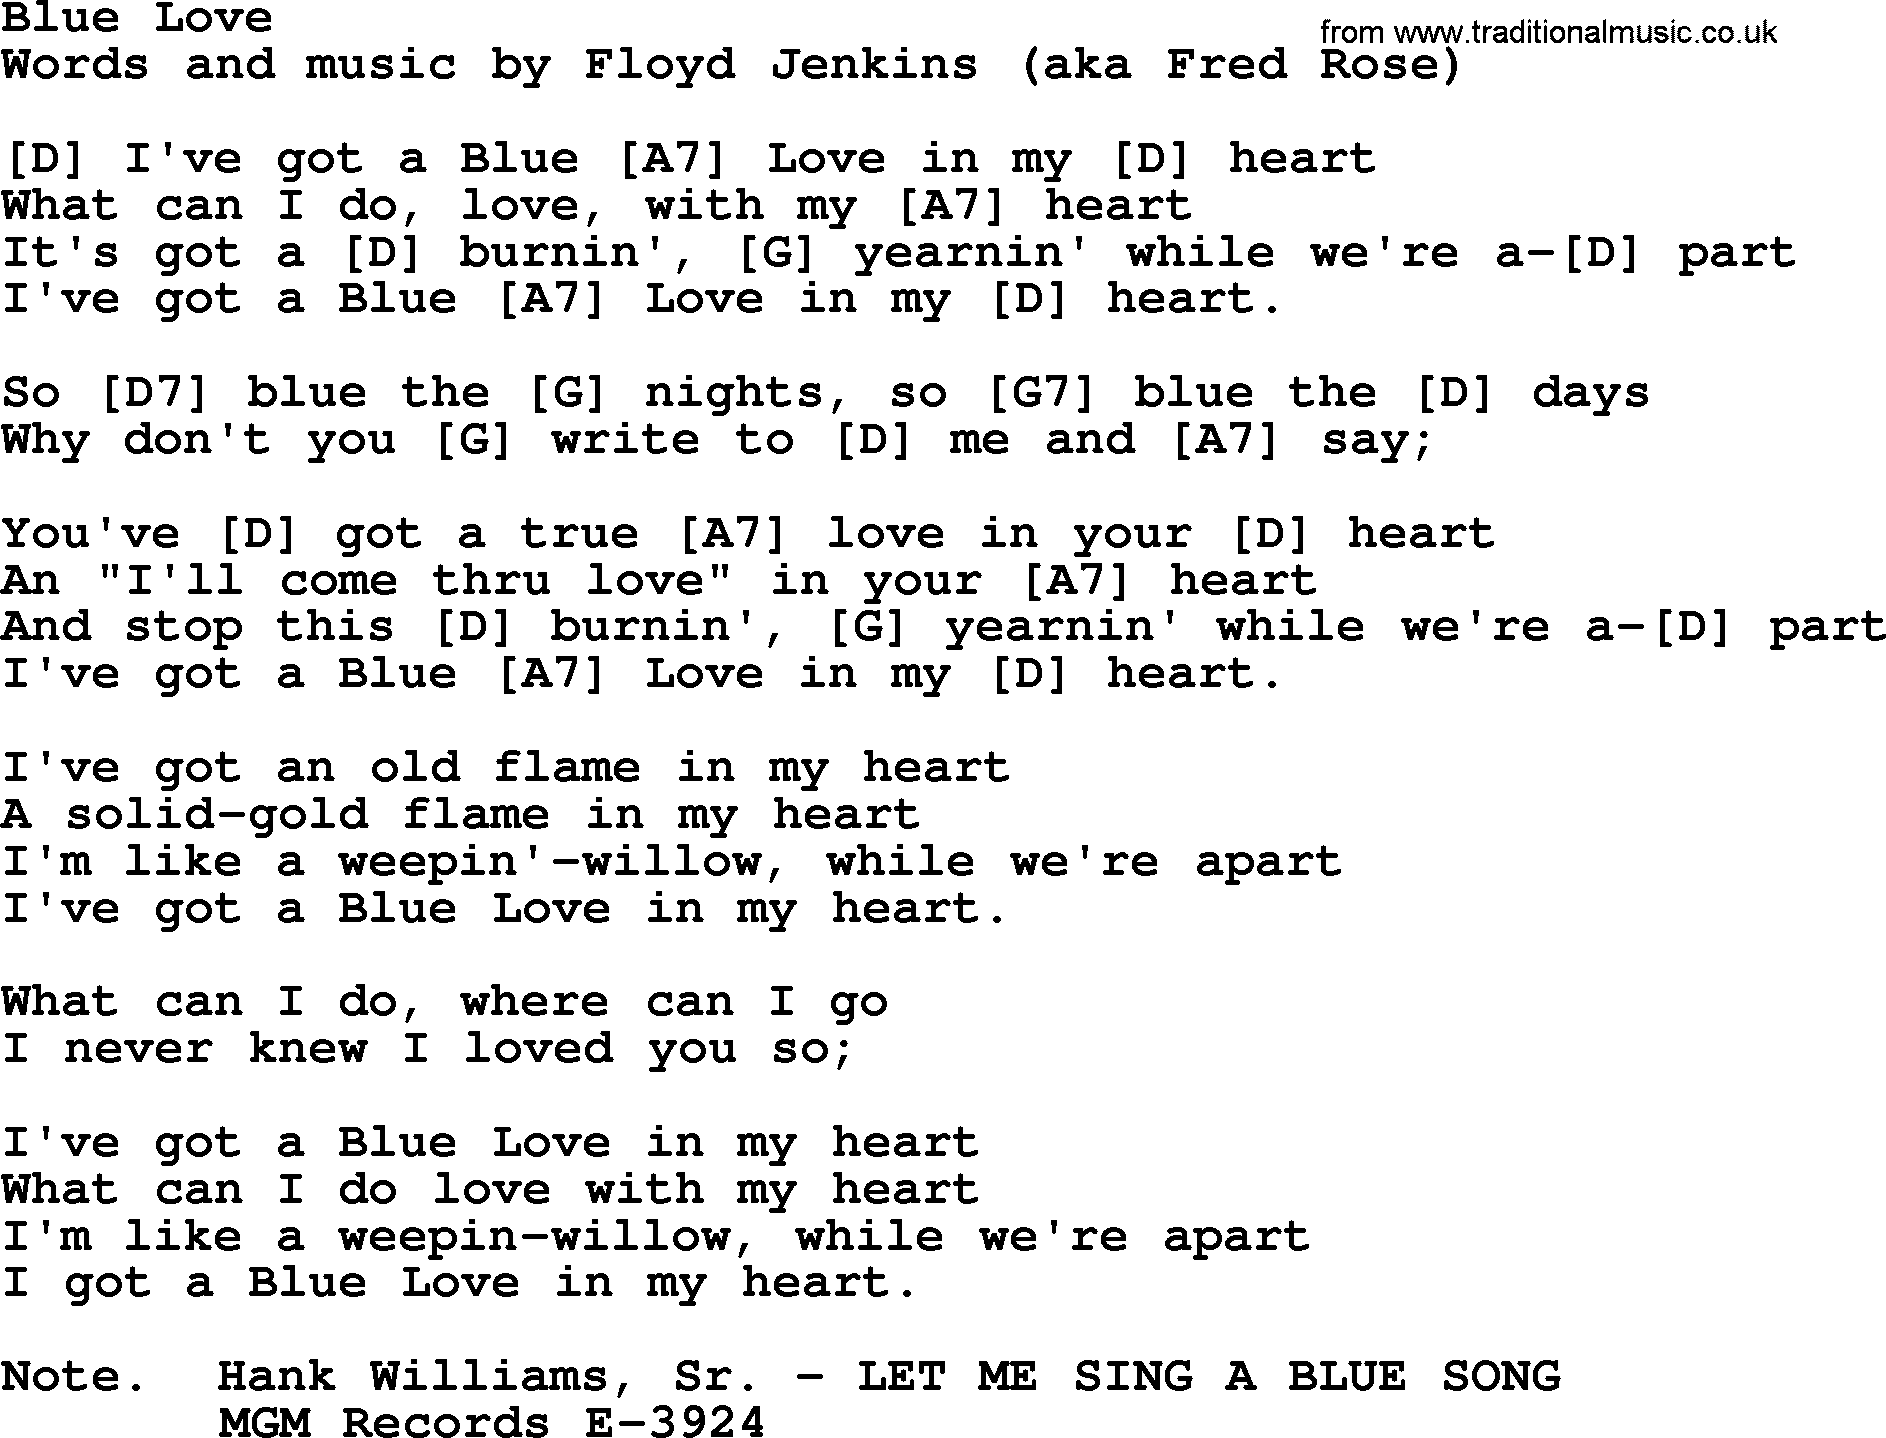 Hank Williams song Blue Love, lyrics and chords